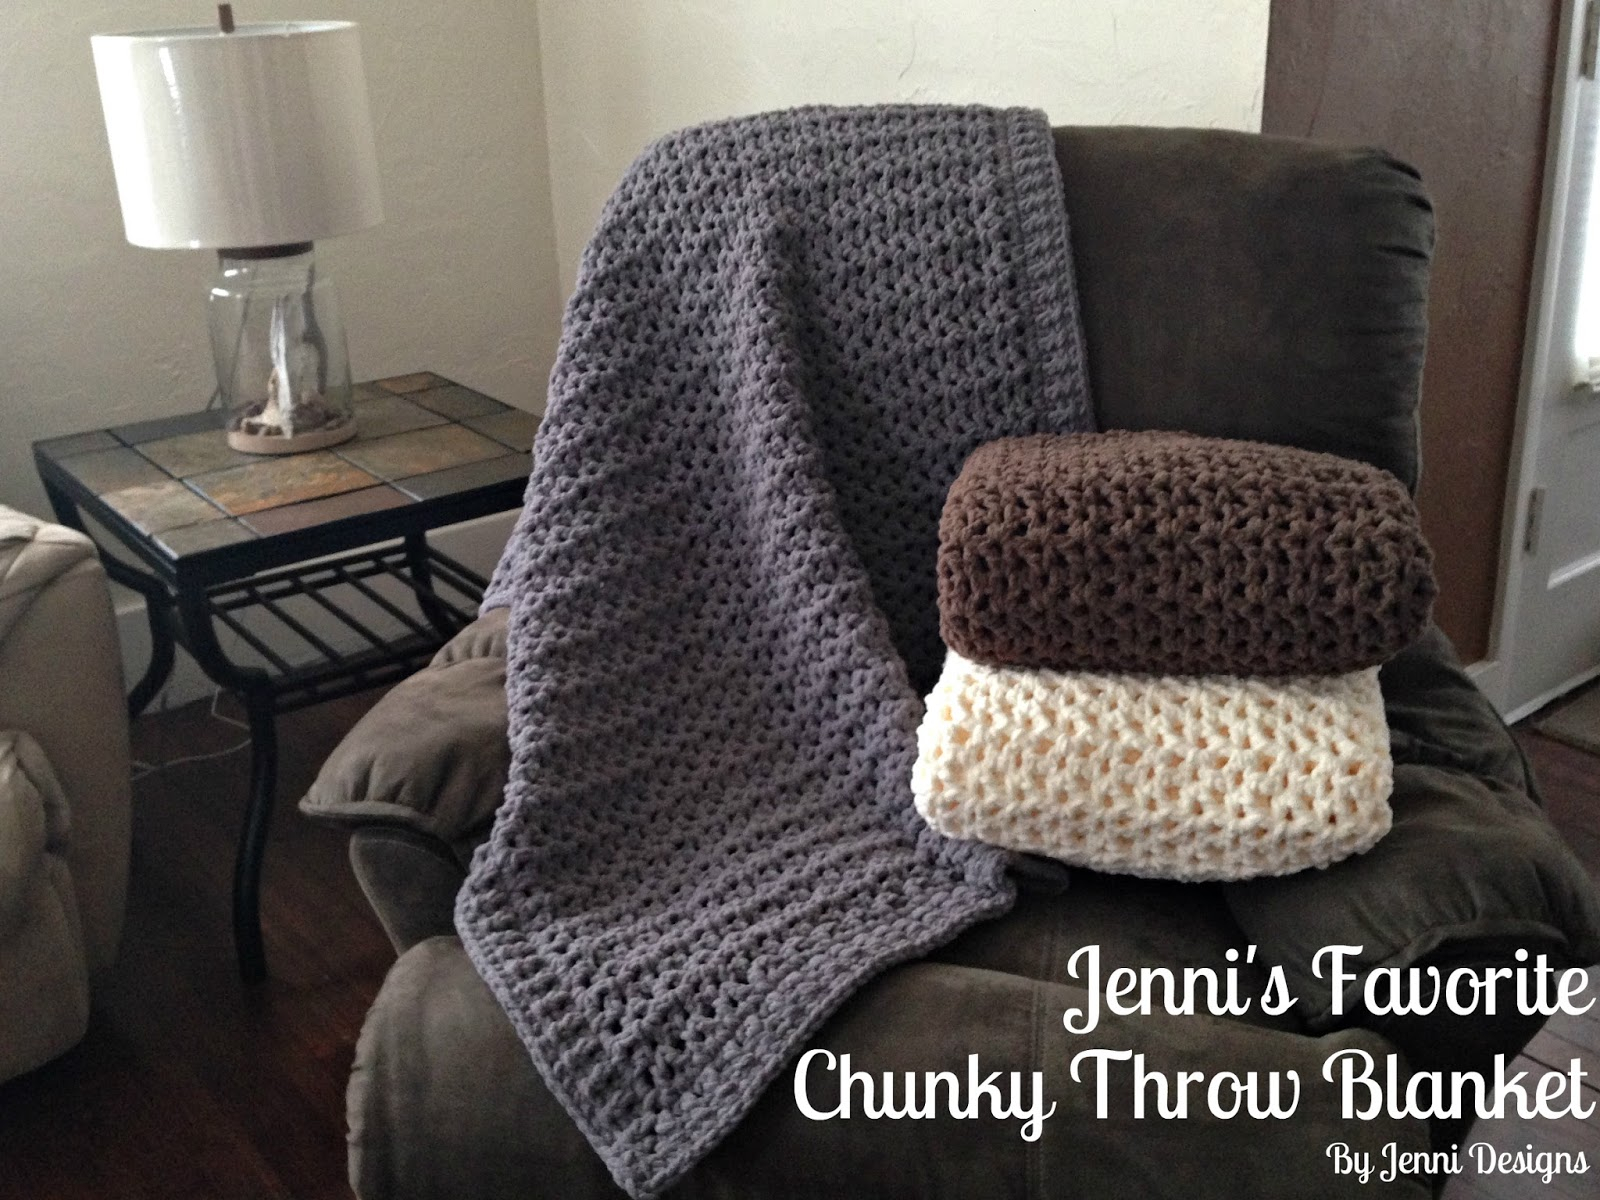 Bulky Crochet Blanket Pattern Jenni Designs Free Crochet Pattern Jennis Favorite Chunky